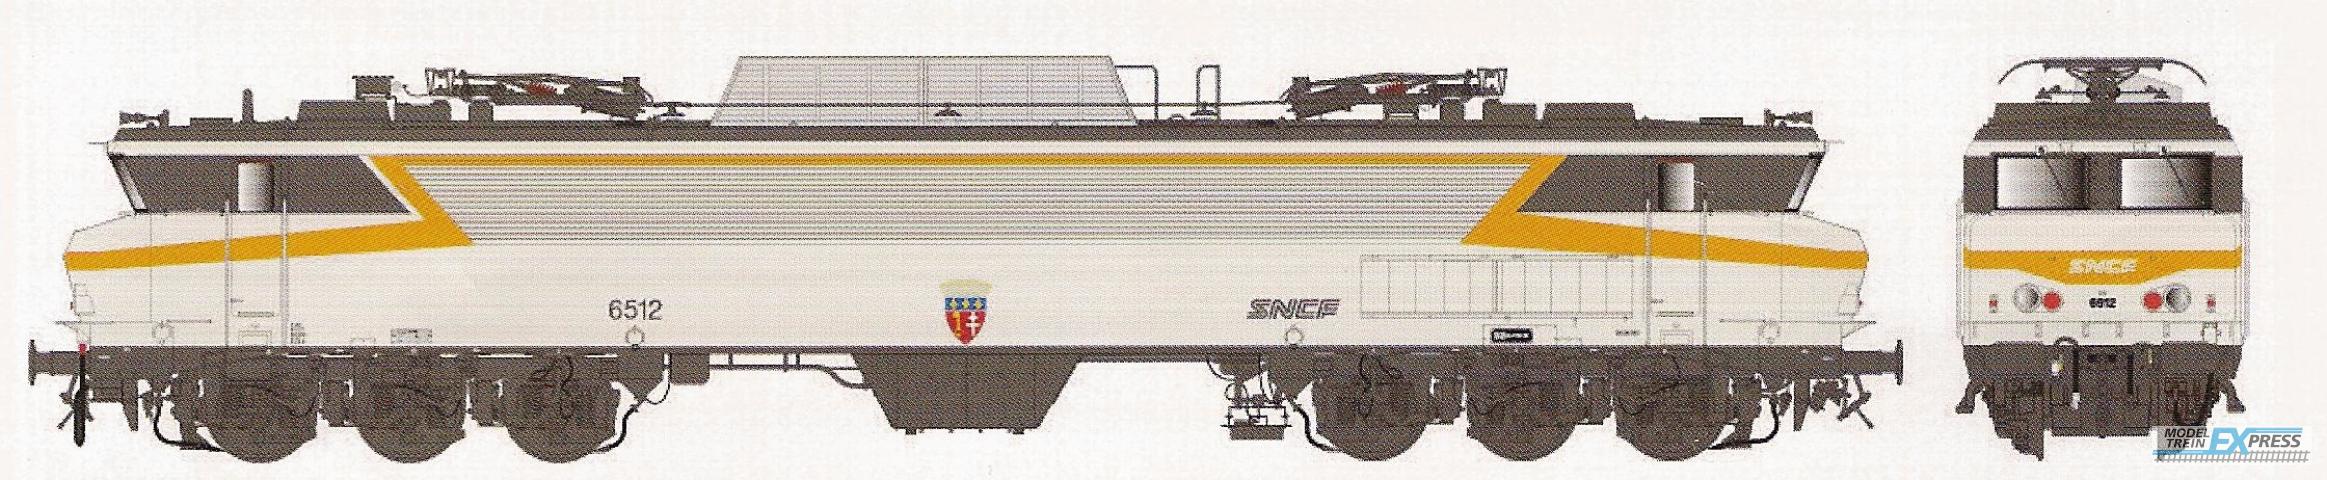 LS Models 10827S CC 6512, grijs/oranje, noedels logo, blazoen Narbonne, 200 km/h  /  Ep. IV  /  SNCF  /  HO  /  AC SOUND  /  1 P.